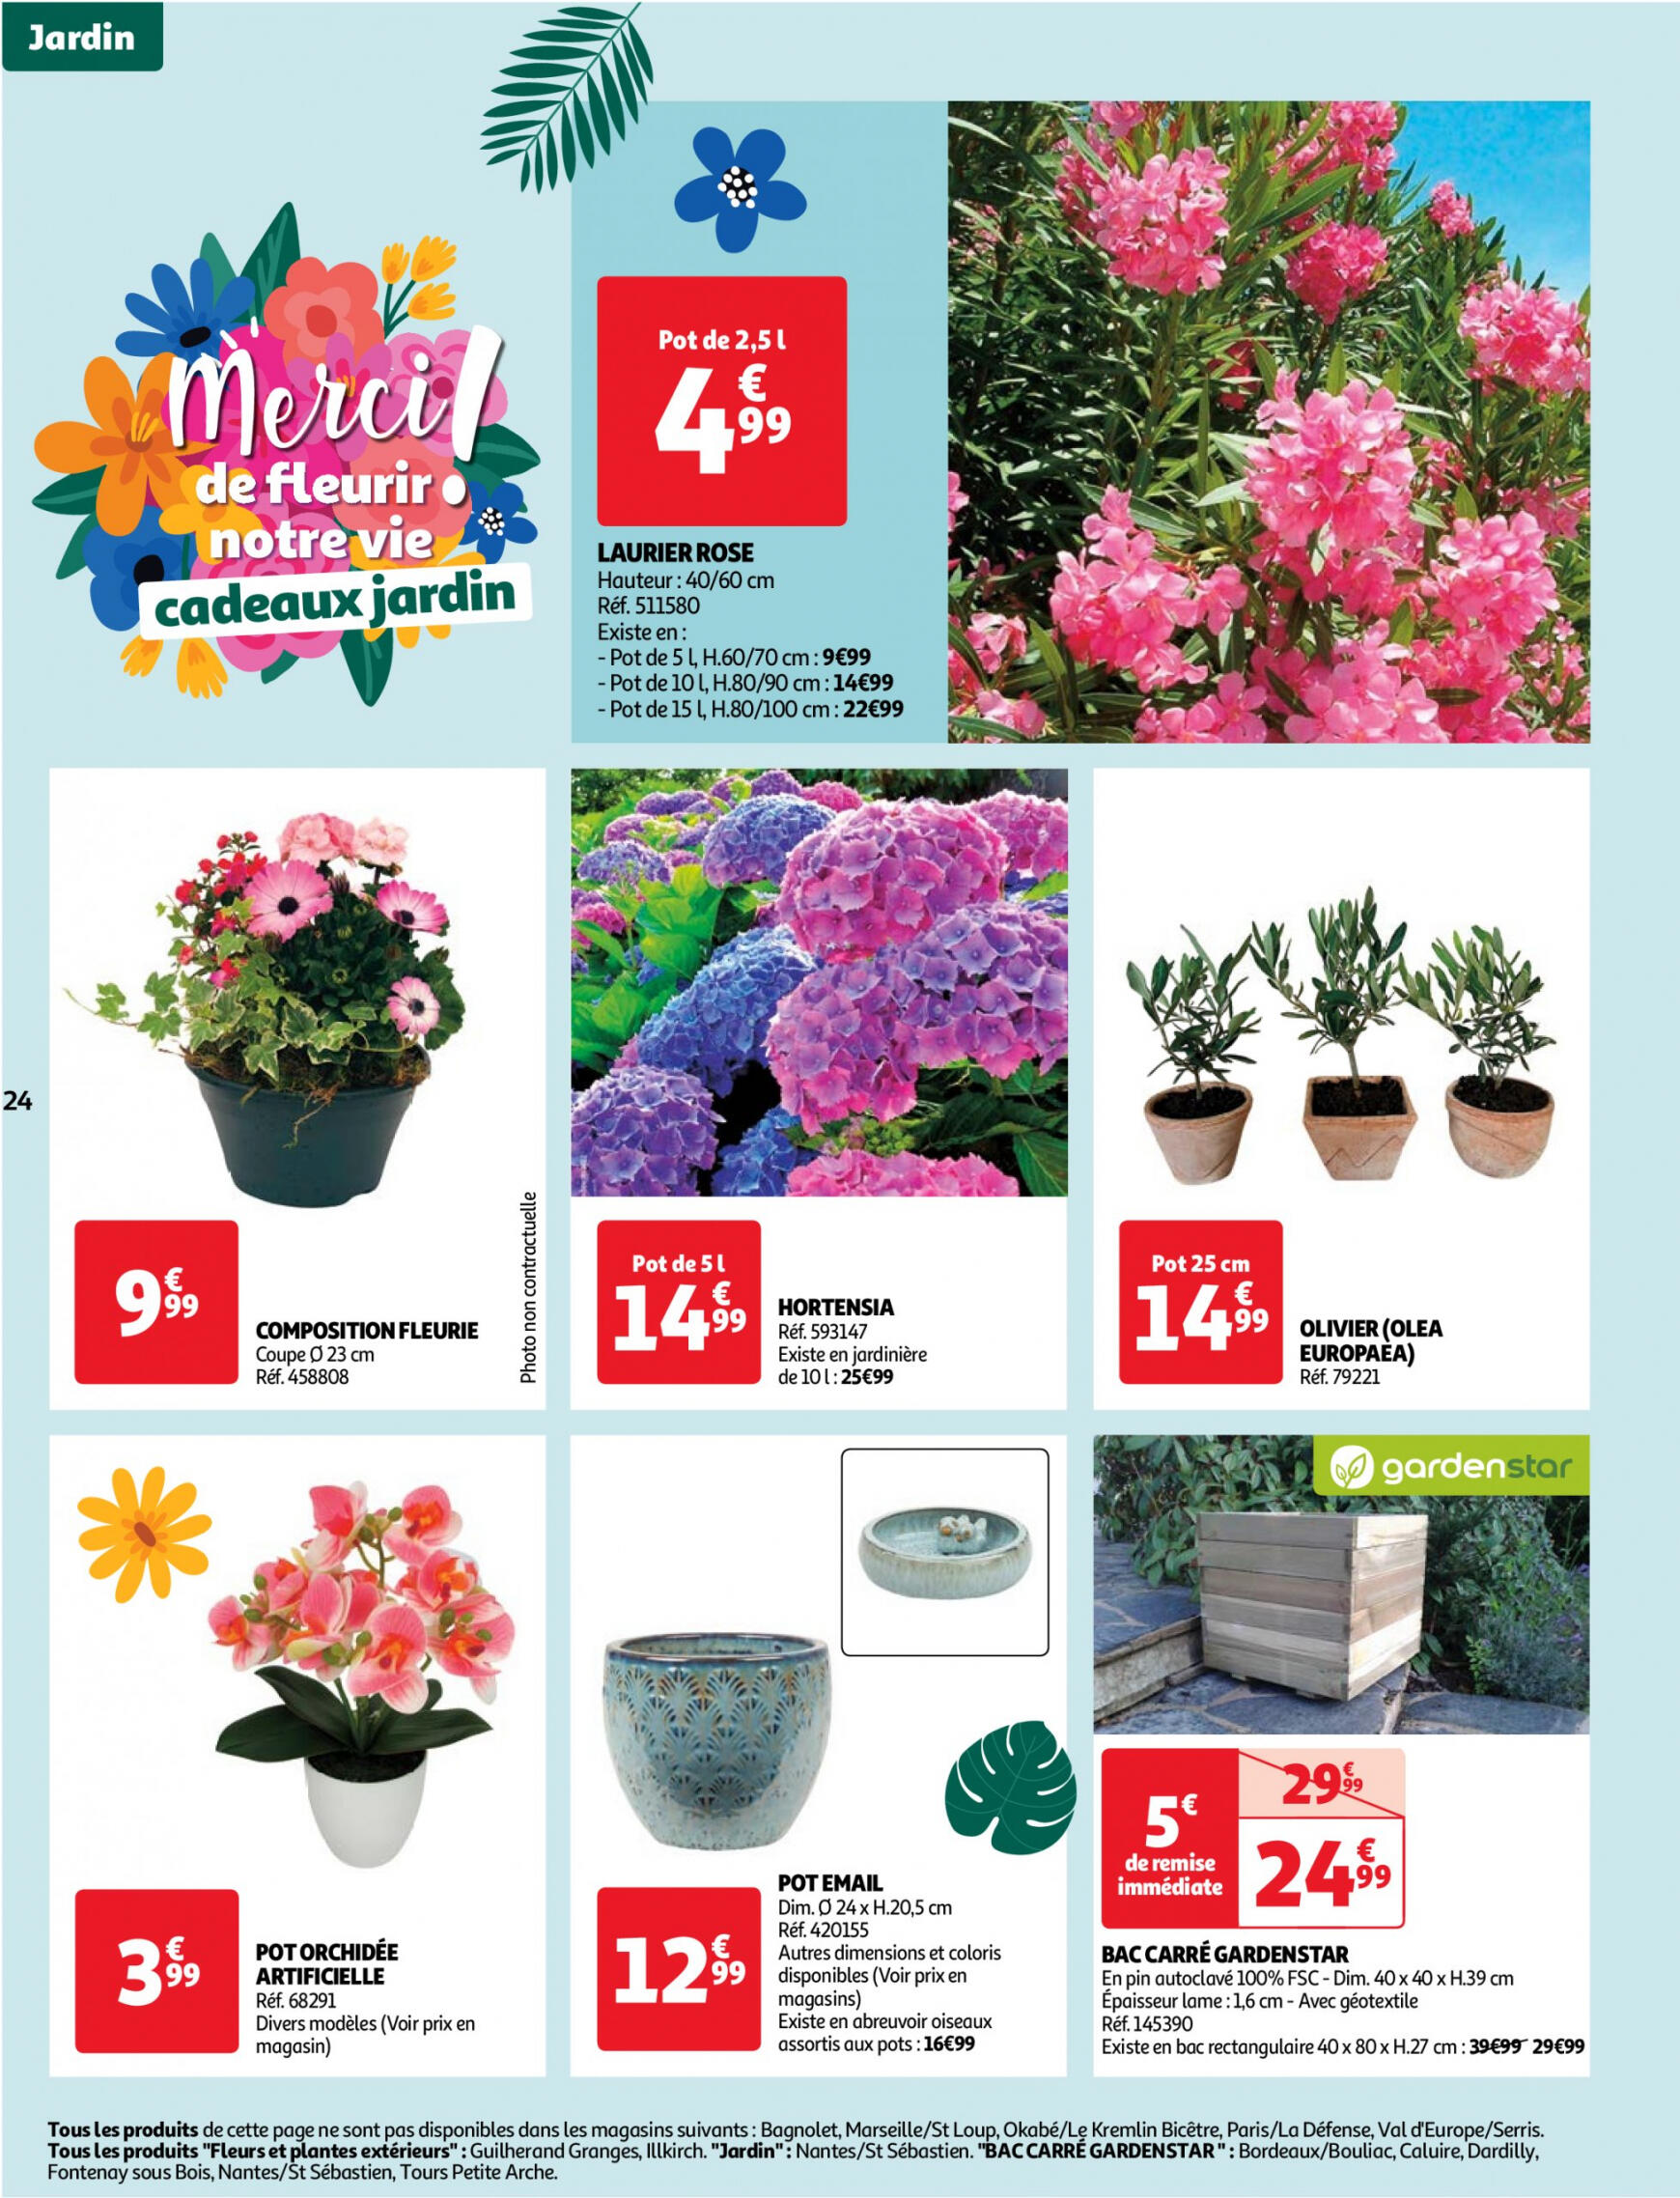 auchan - Prospectus Auchan - Merci maman actuel 14.05. - 26.05. - page: 24